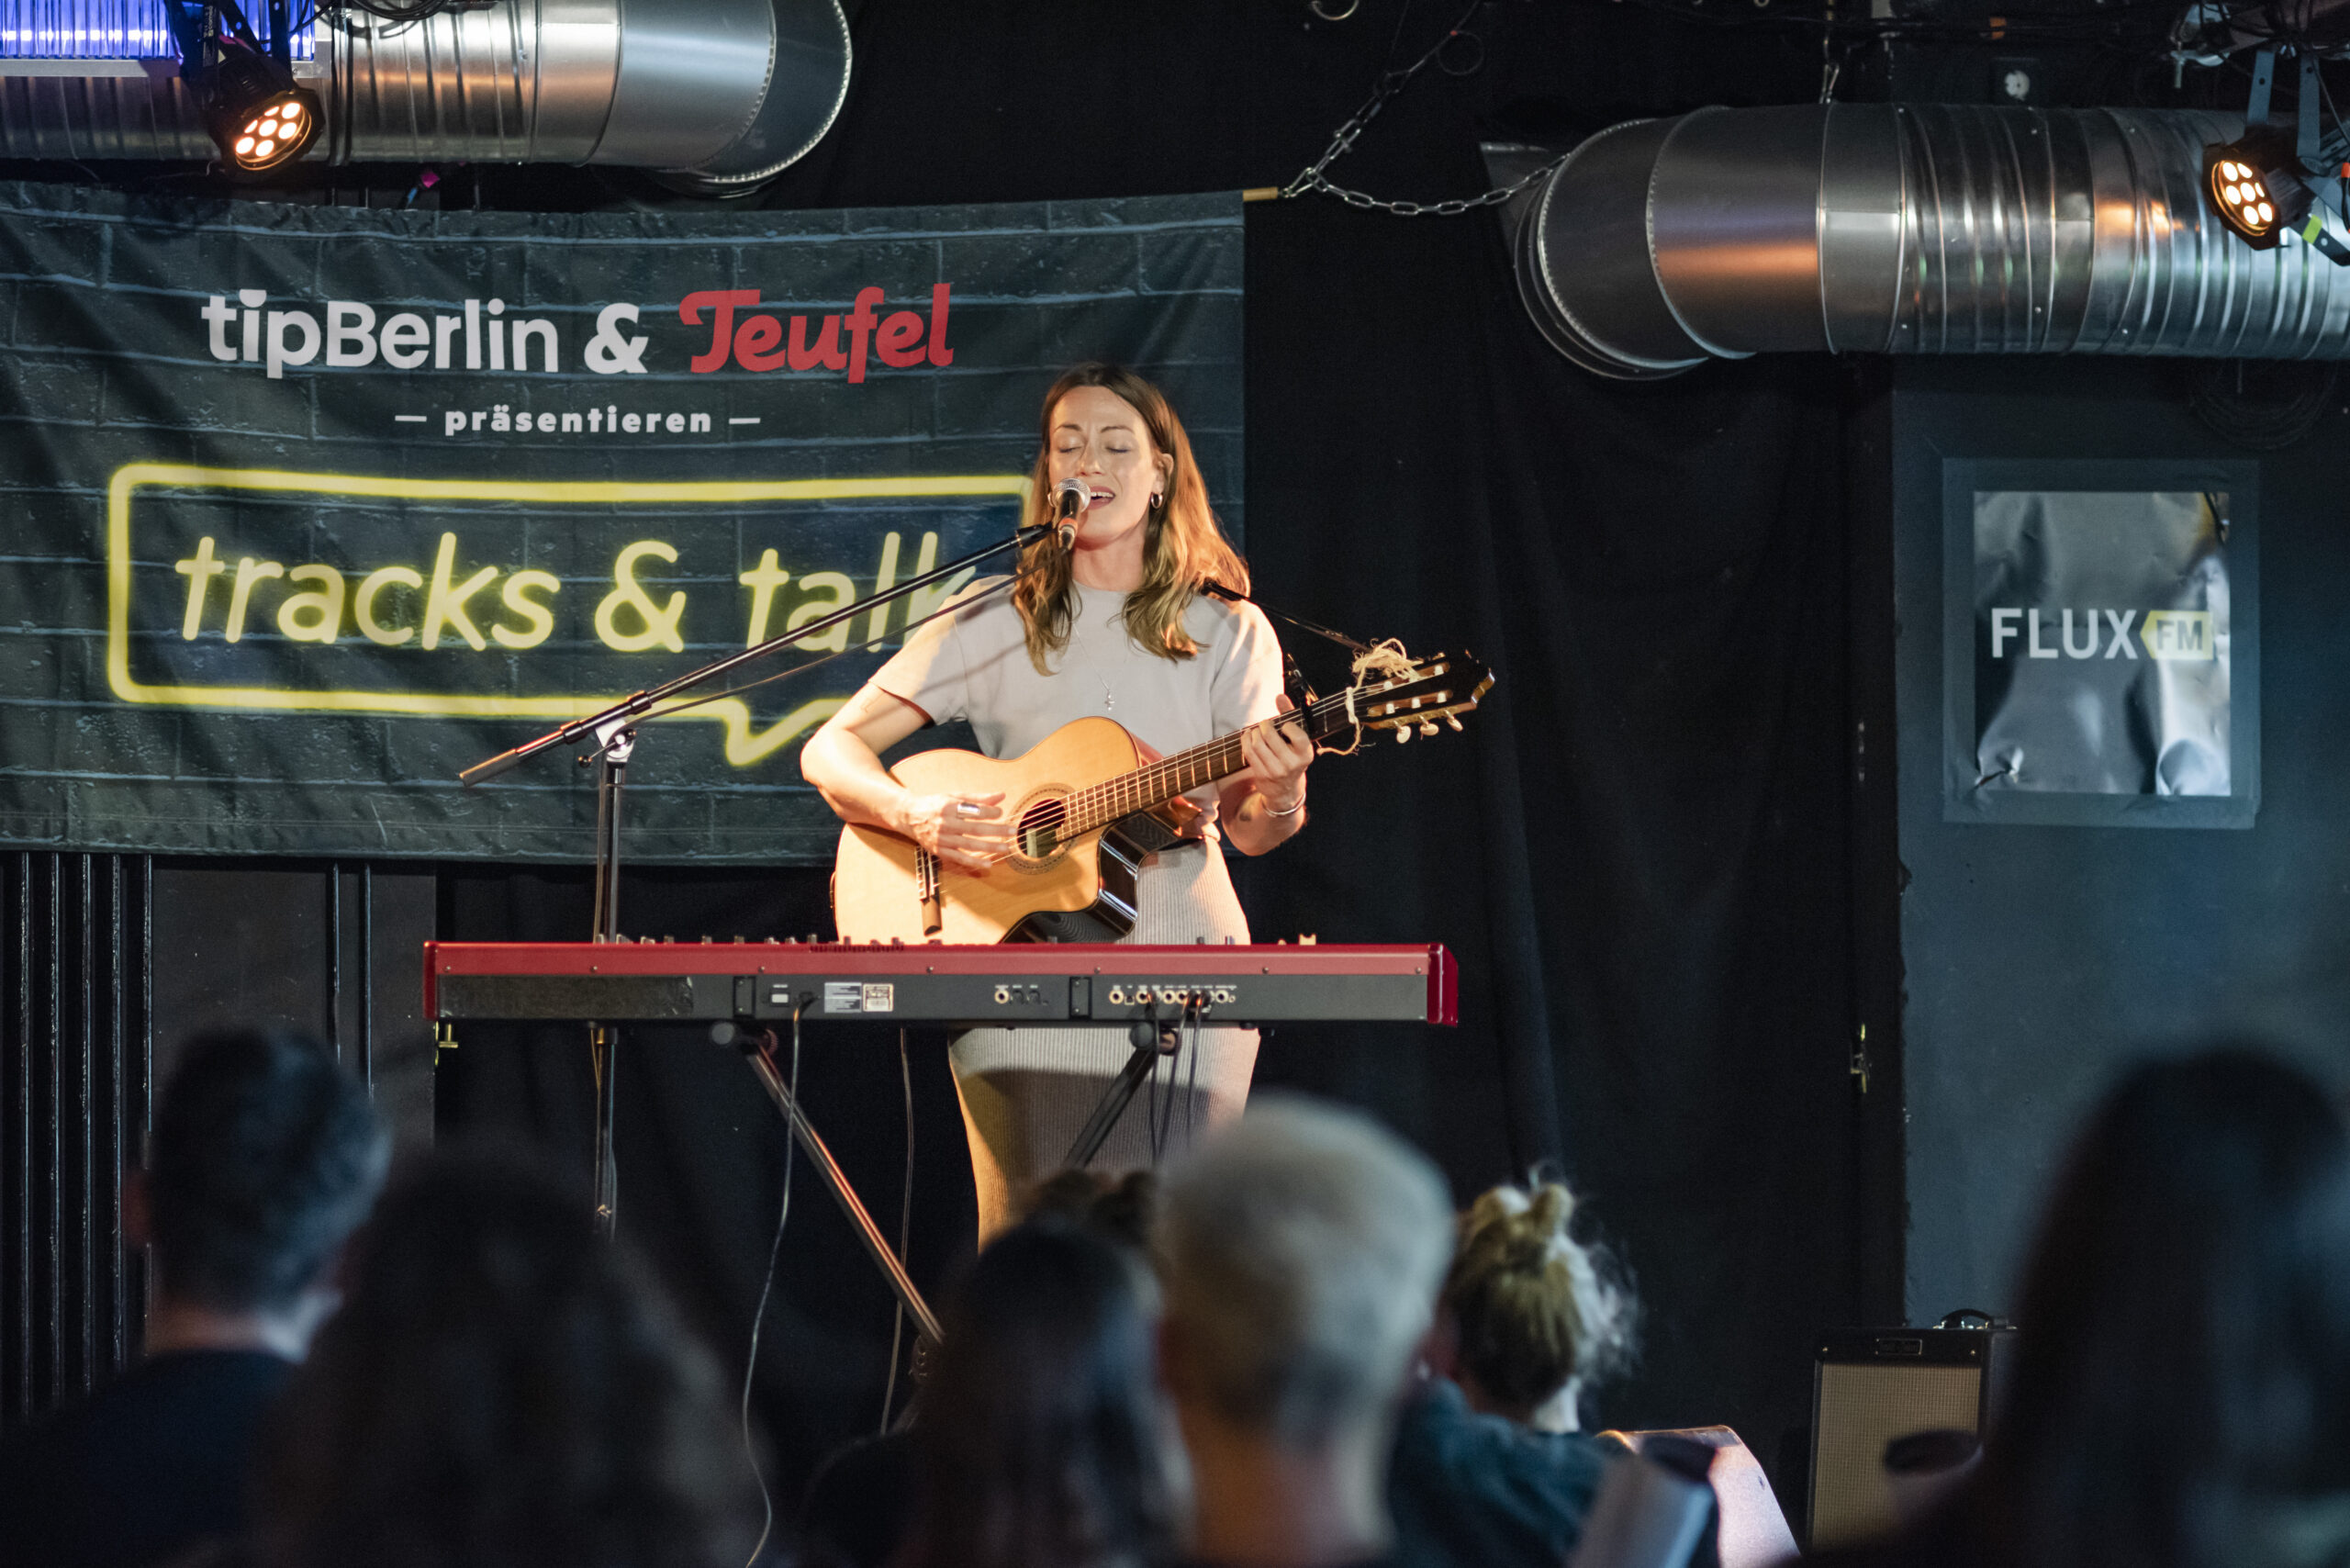 Die Berliner Musikerin Charlotte Brandi bei tracks & talk im FluxBau. Foto: MAK/tipBerlin